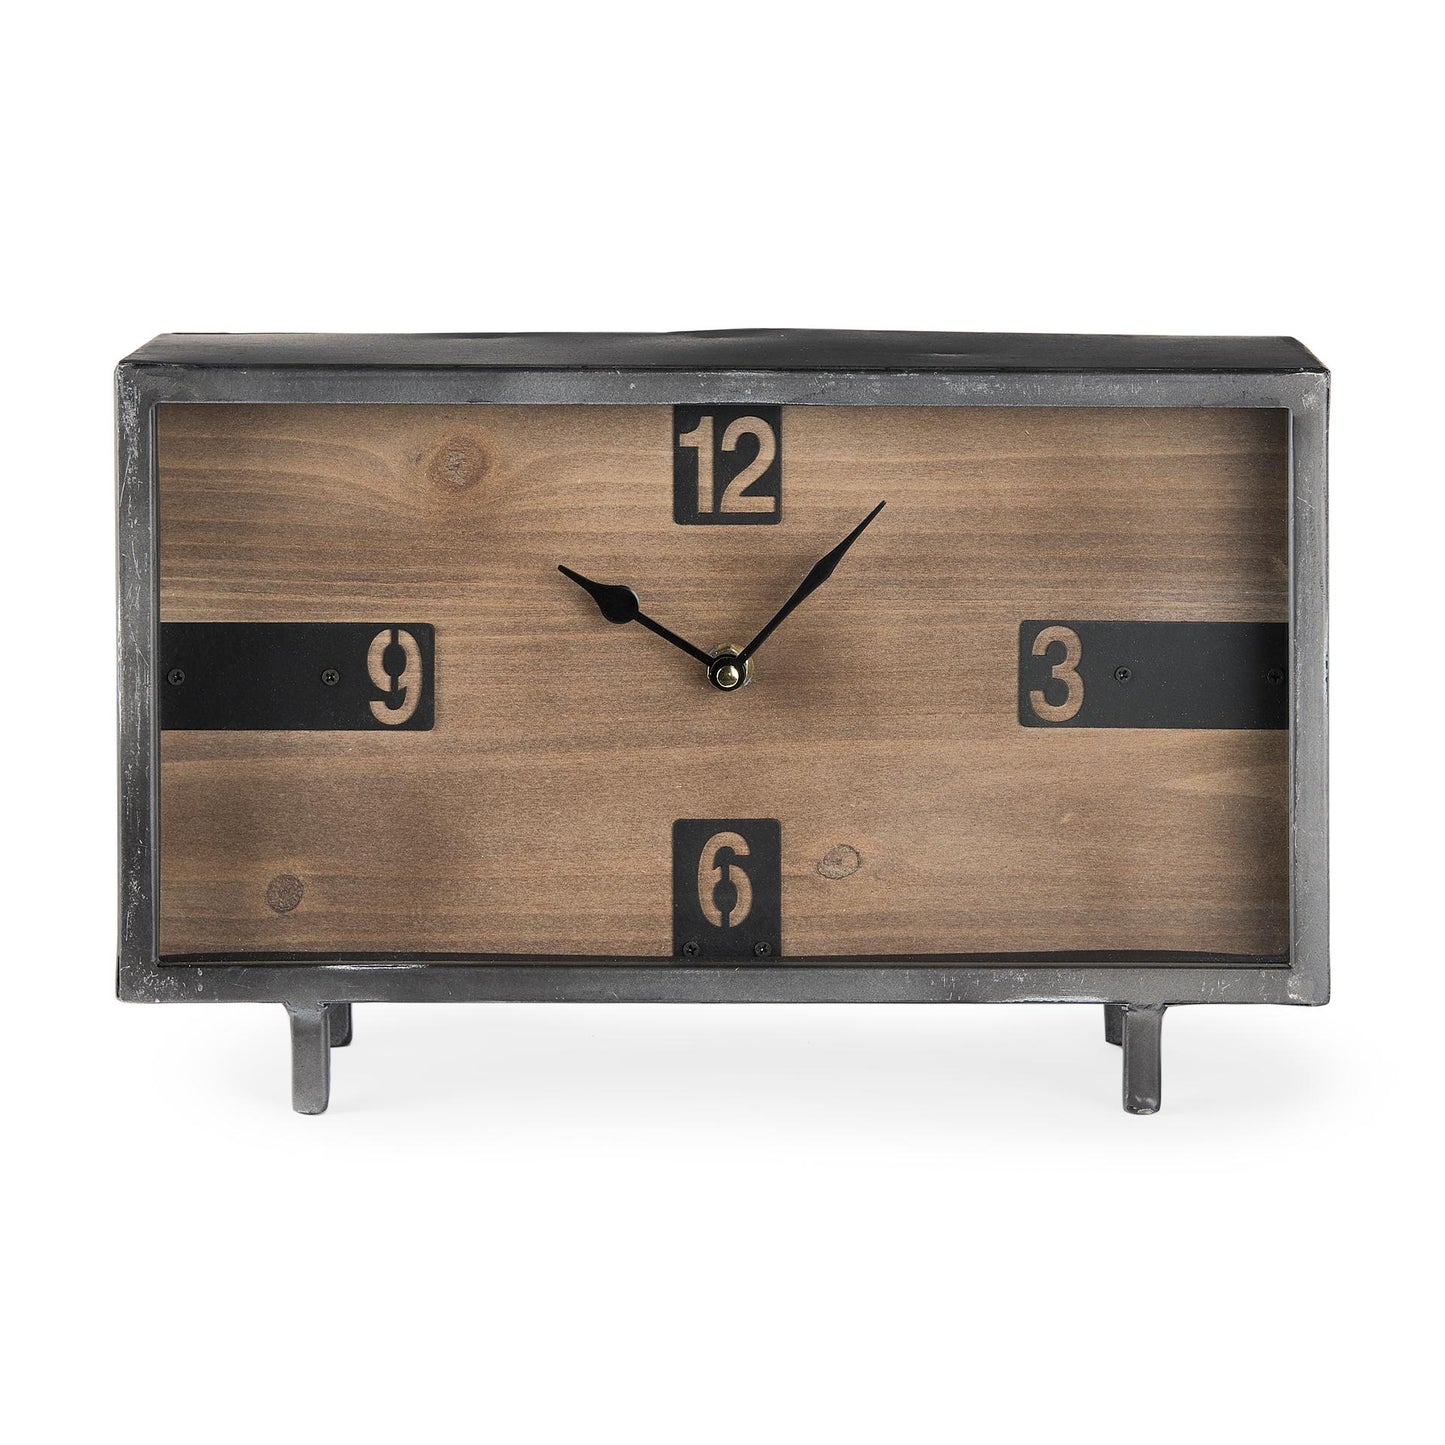 Harvey 13.0L x 4.5W x 8.1H Black Metal and Wood Rectangular Table Clocket